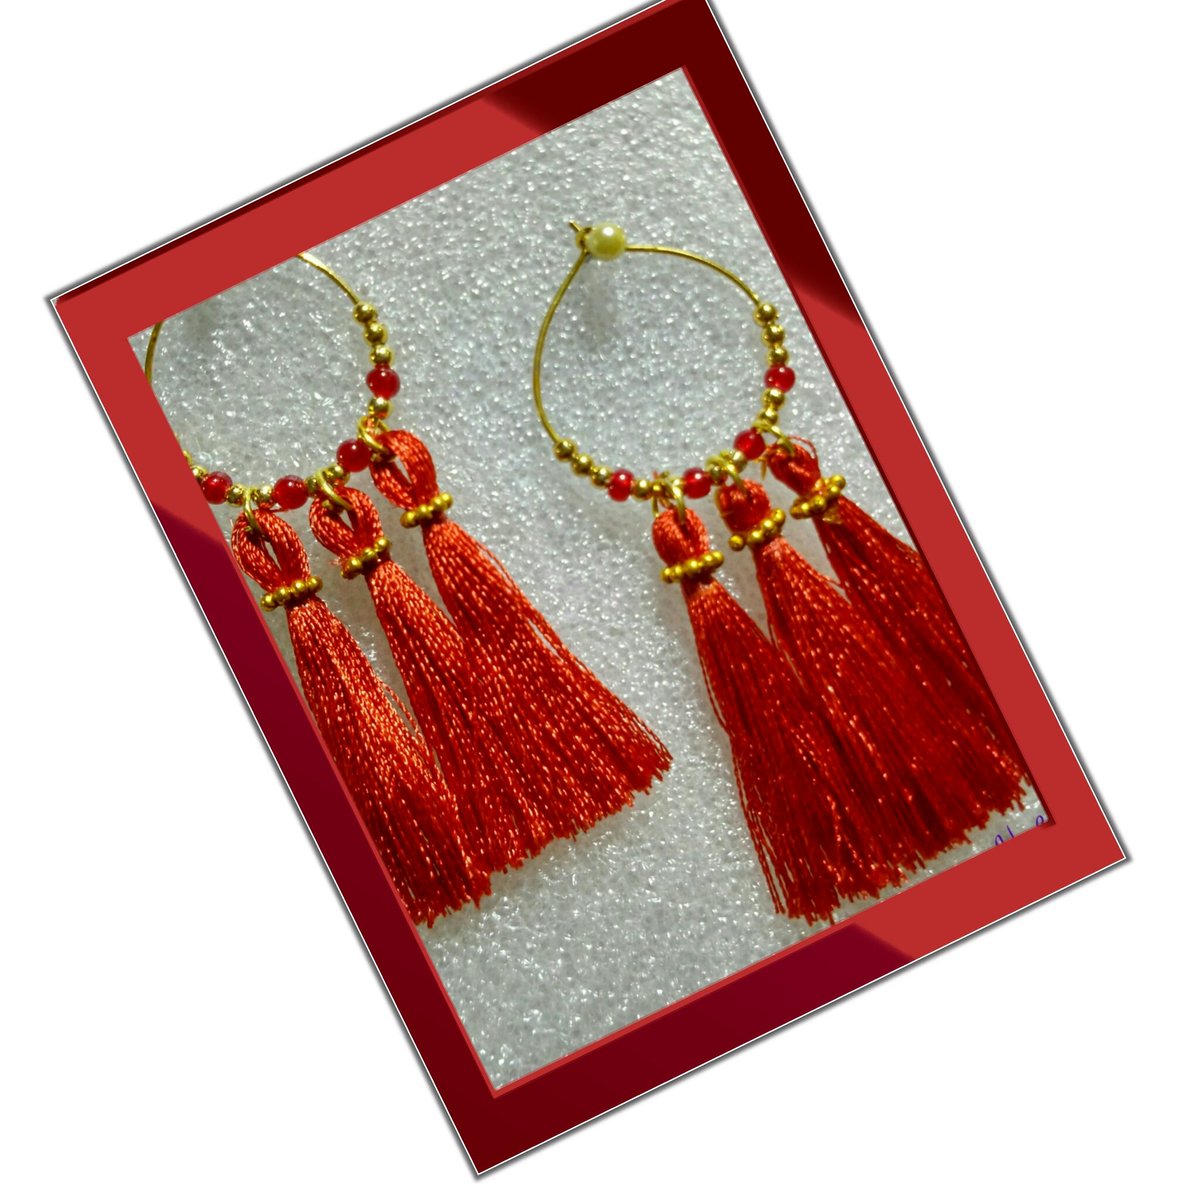 Bright Red Silk thread Tassels Hoop Earrings. DIY on my YouTube channel Upbeat Hues 
youtu.be/F4JYZfiZ6vE

#jewelry #earrings #handmade #tasselearrings #tassels #redtassel #hoopearrings #silkthreadjewellery #silkthreadearrings #DIY #upbeathues